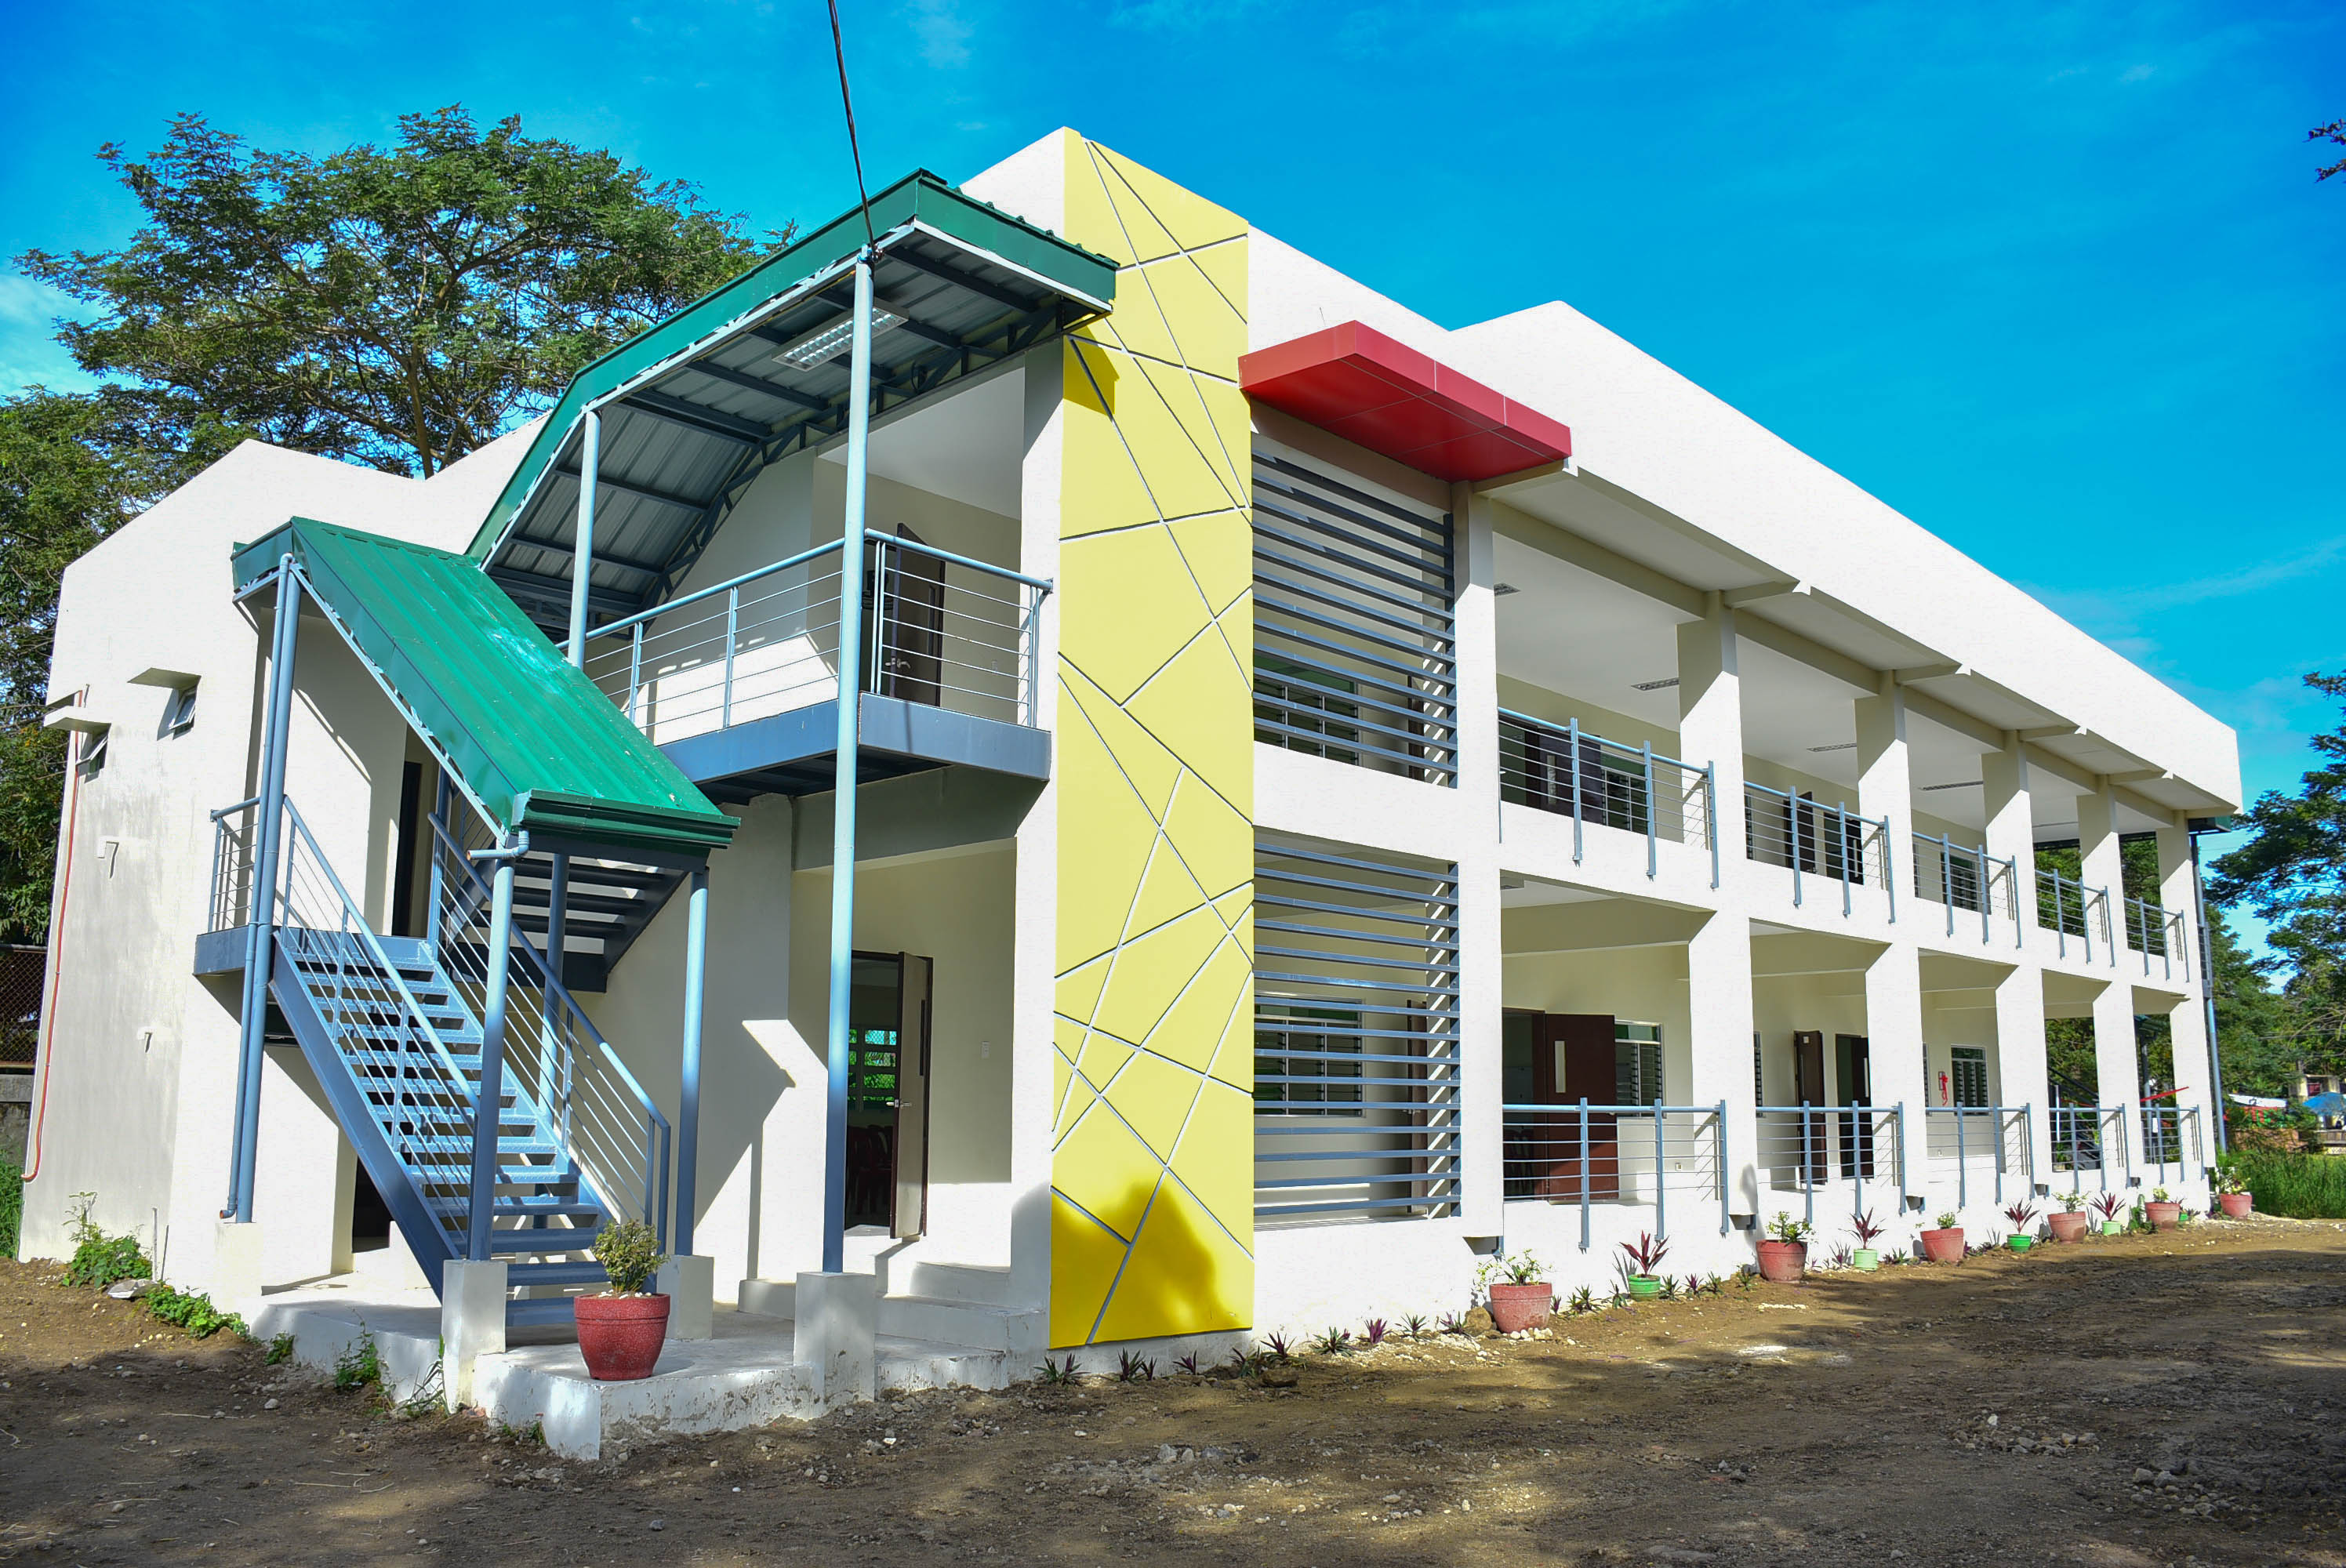 bulacan state university admin building